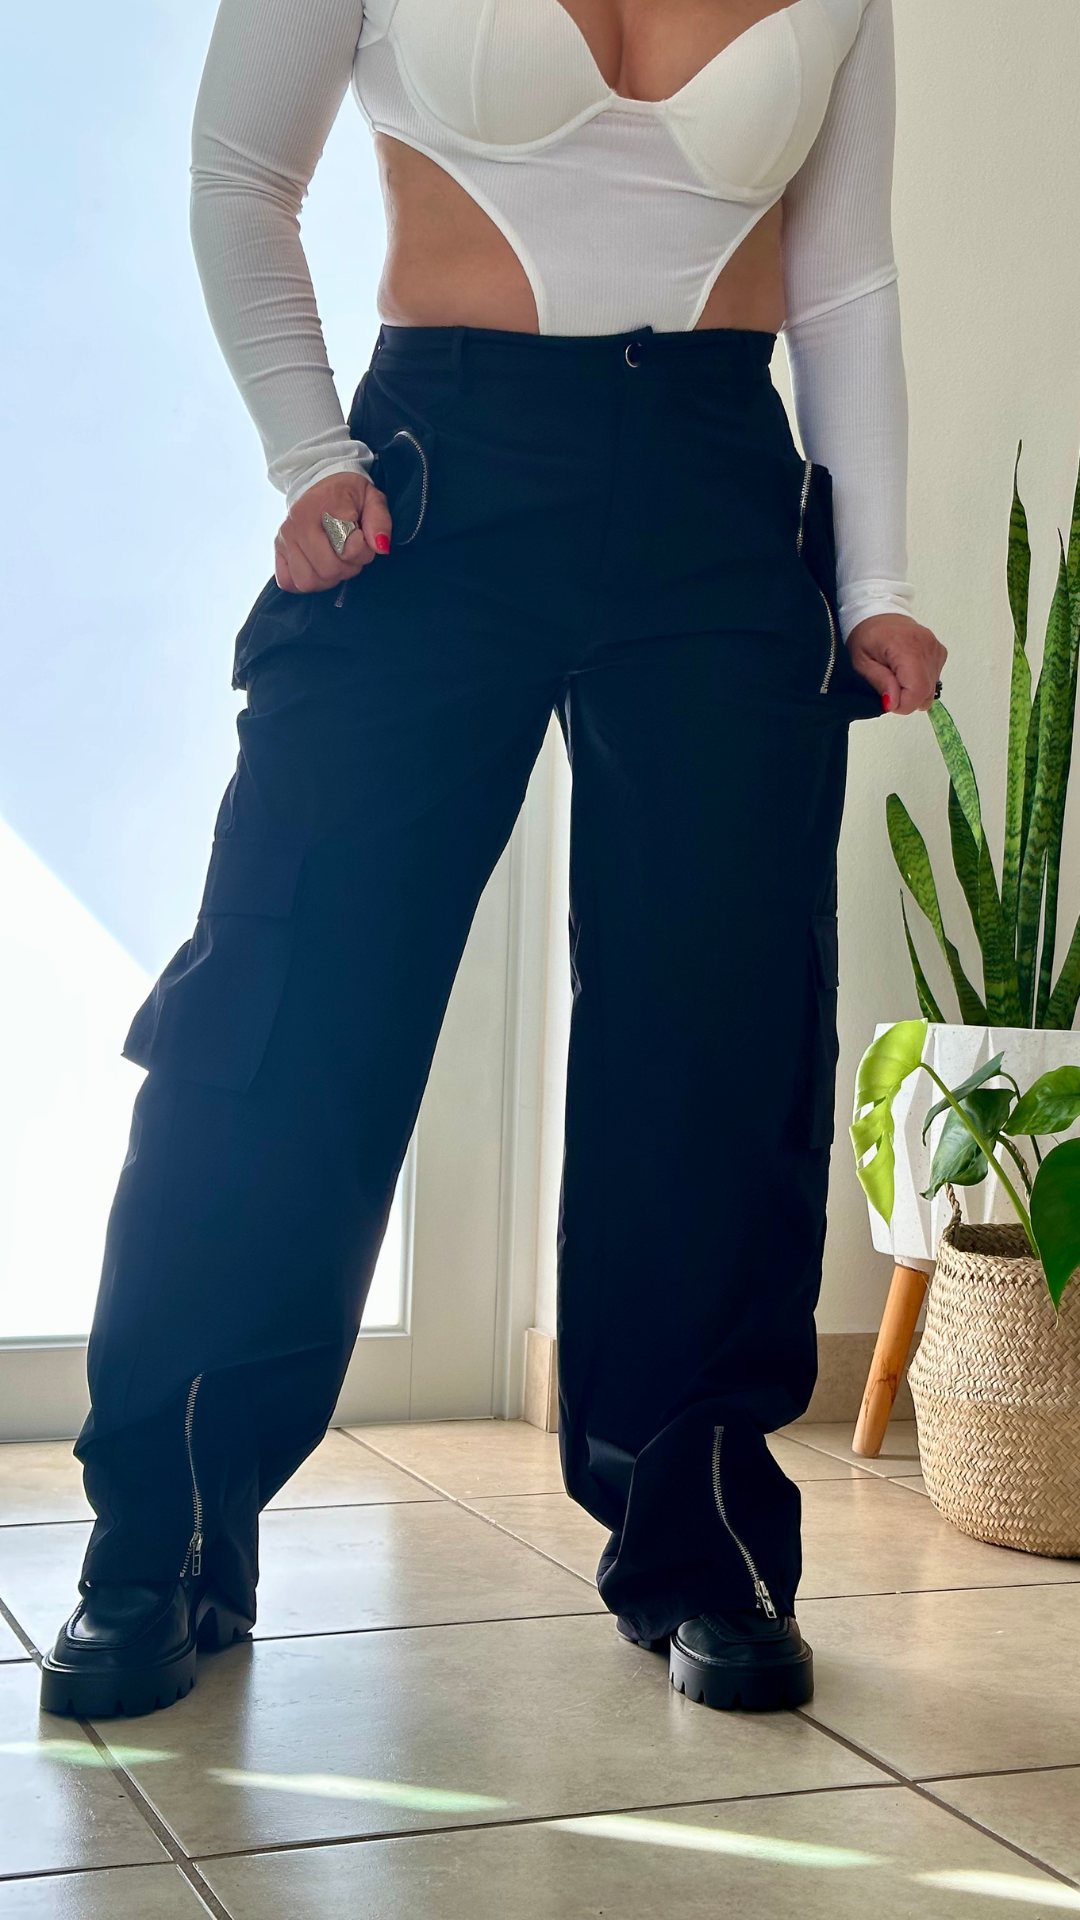 Stylish and Practical: High-Waisted Nylon Cargo Pants